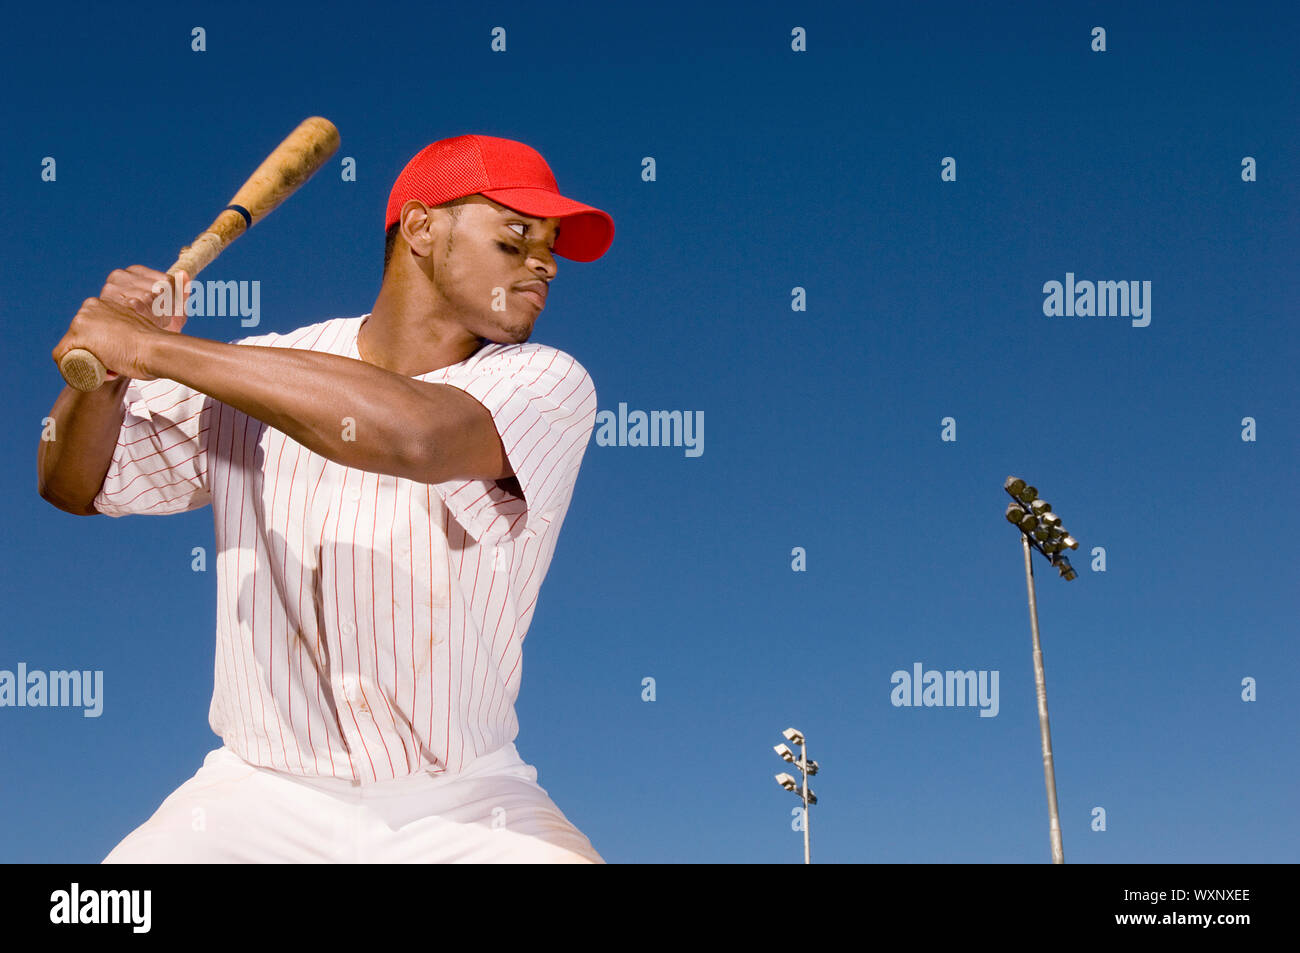 Baseball Batter Preparing to Hit Ball Stock Photo